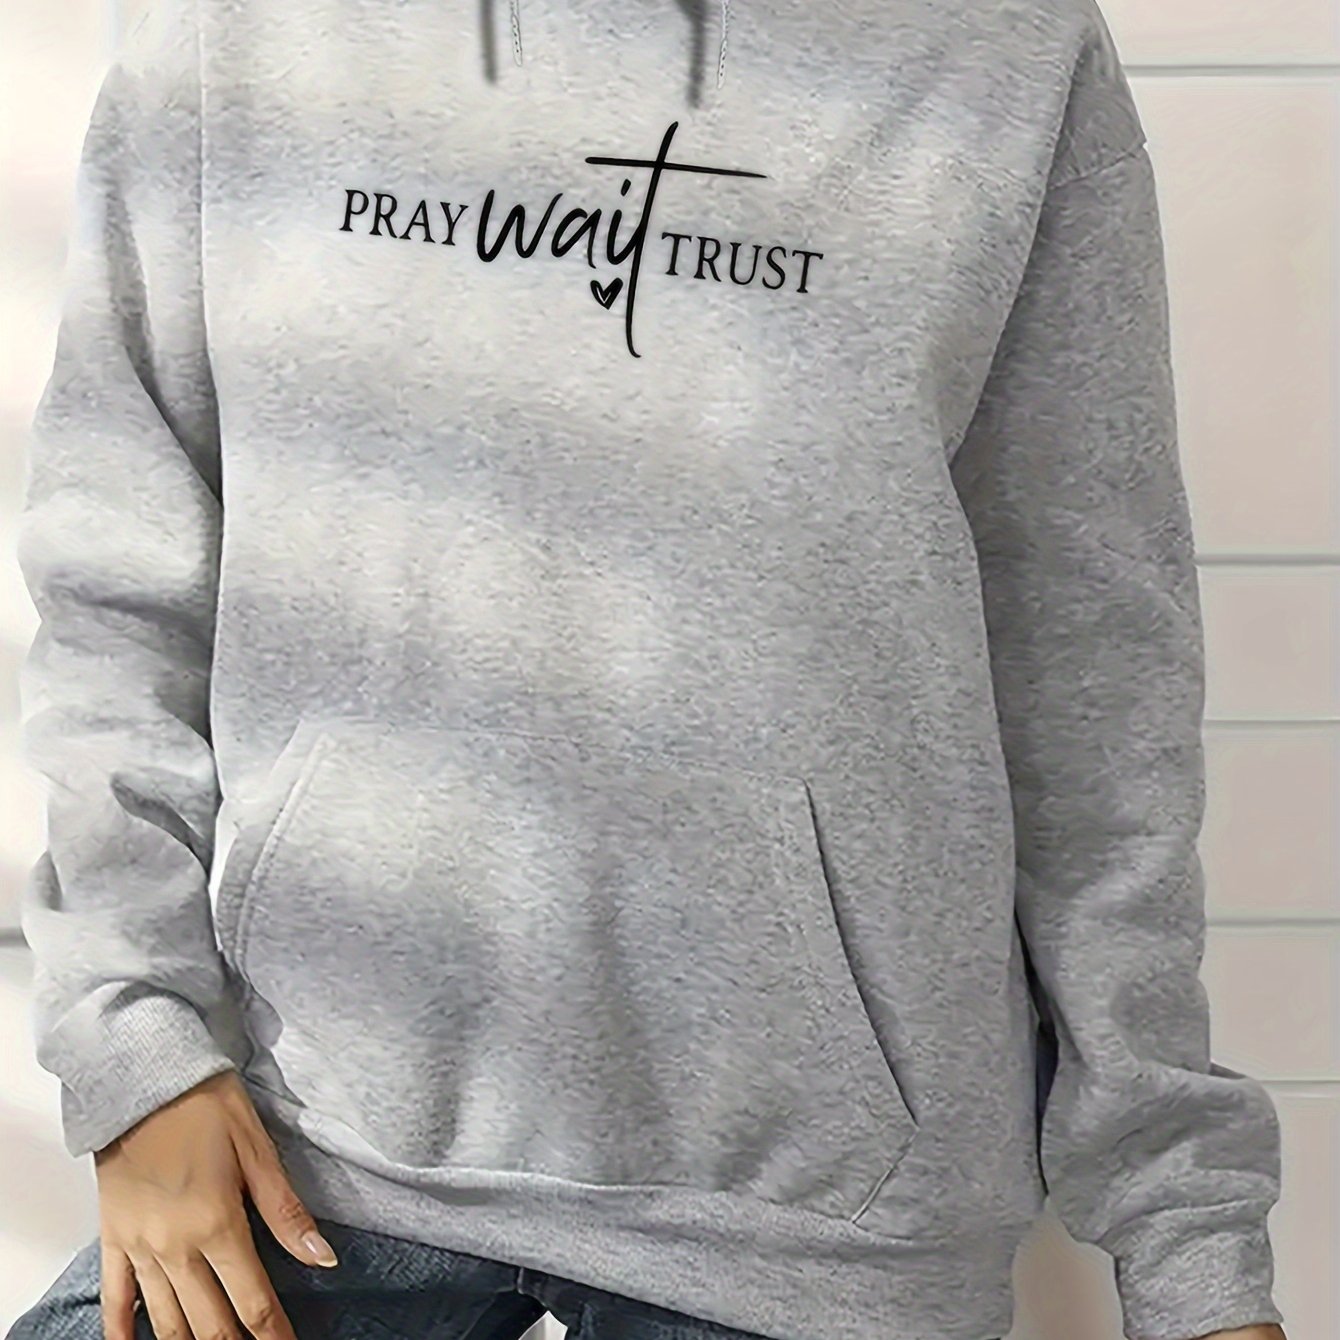 Pray Wait Trust Women's Christian Pullover Hooded Sweatshirt claimedbygoddesigns